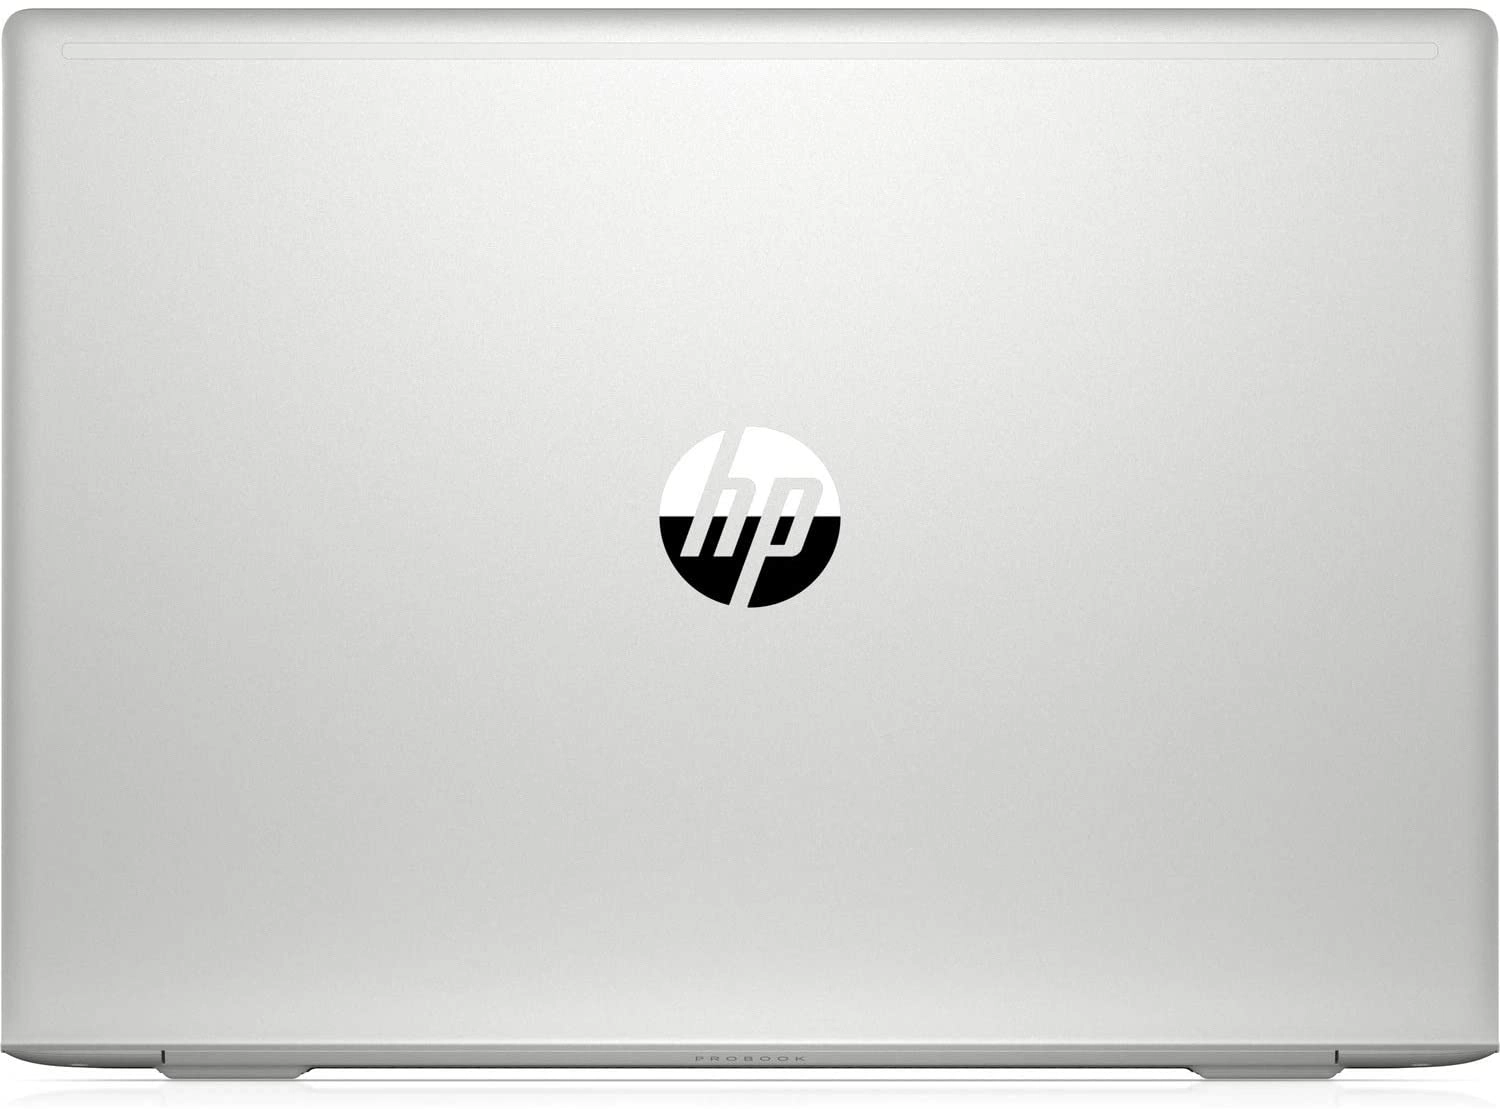 HP SBUY PB450G7 laptop image